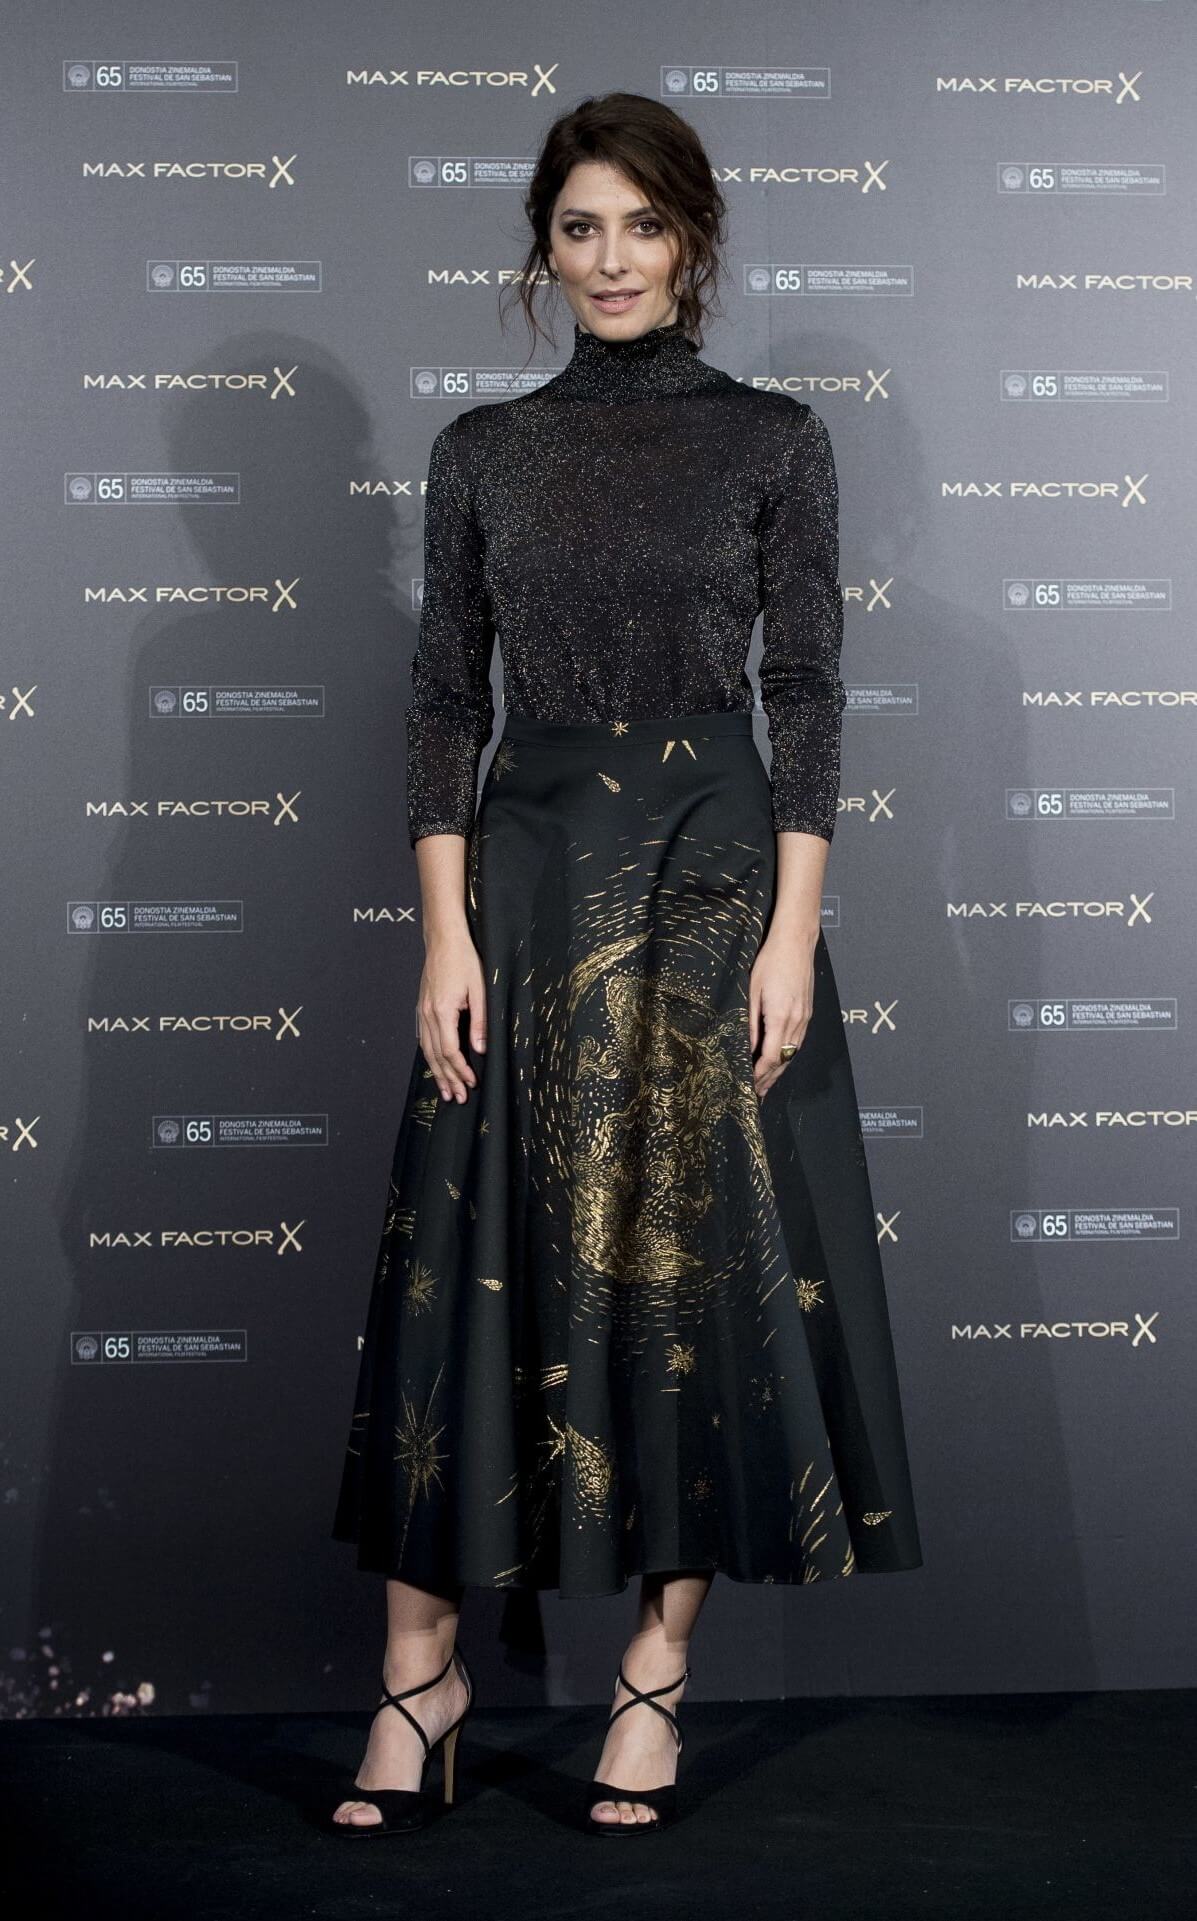 Barbara Lennie In Shimmery High Neck Full Sleeves Golden Printed Long Dress At Wins the Max Factor Award in San Sebastián